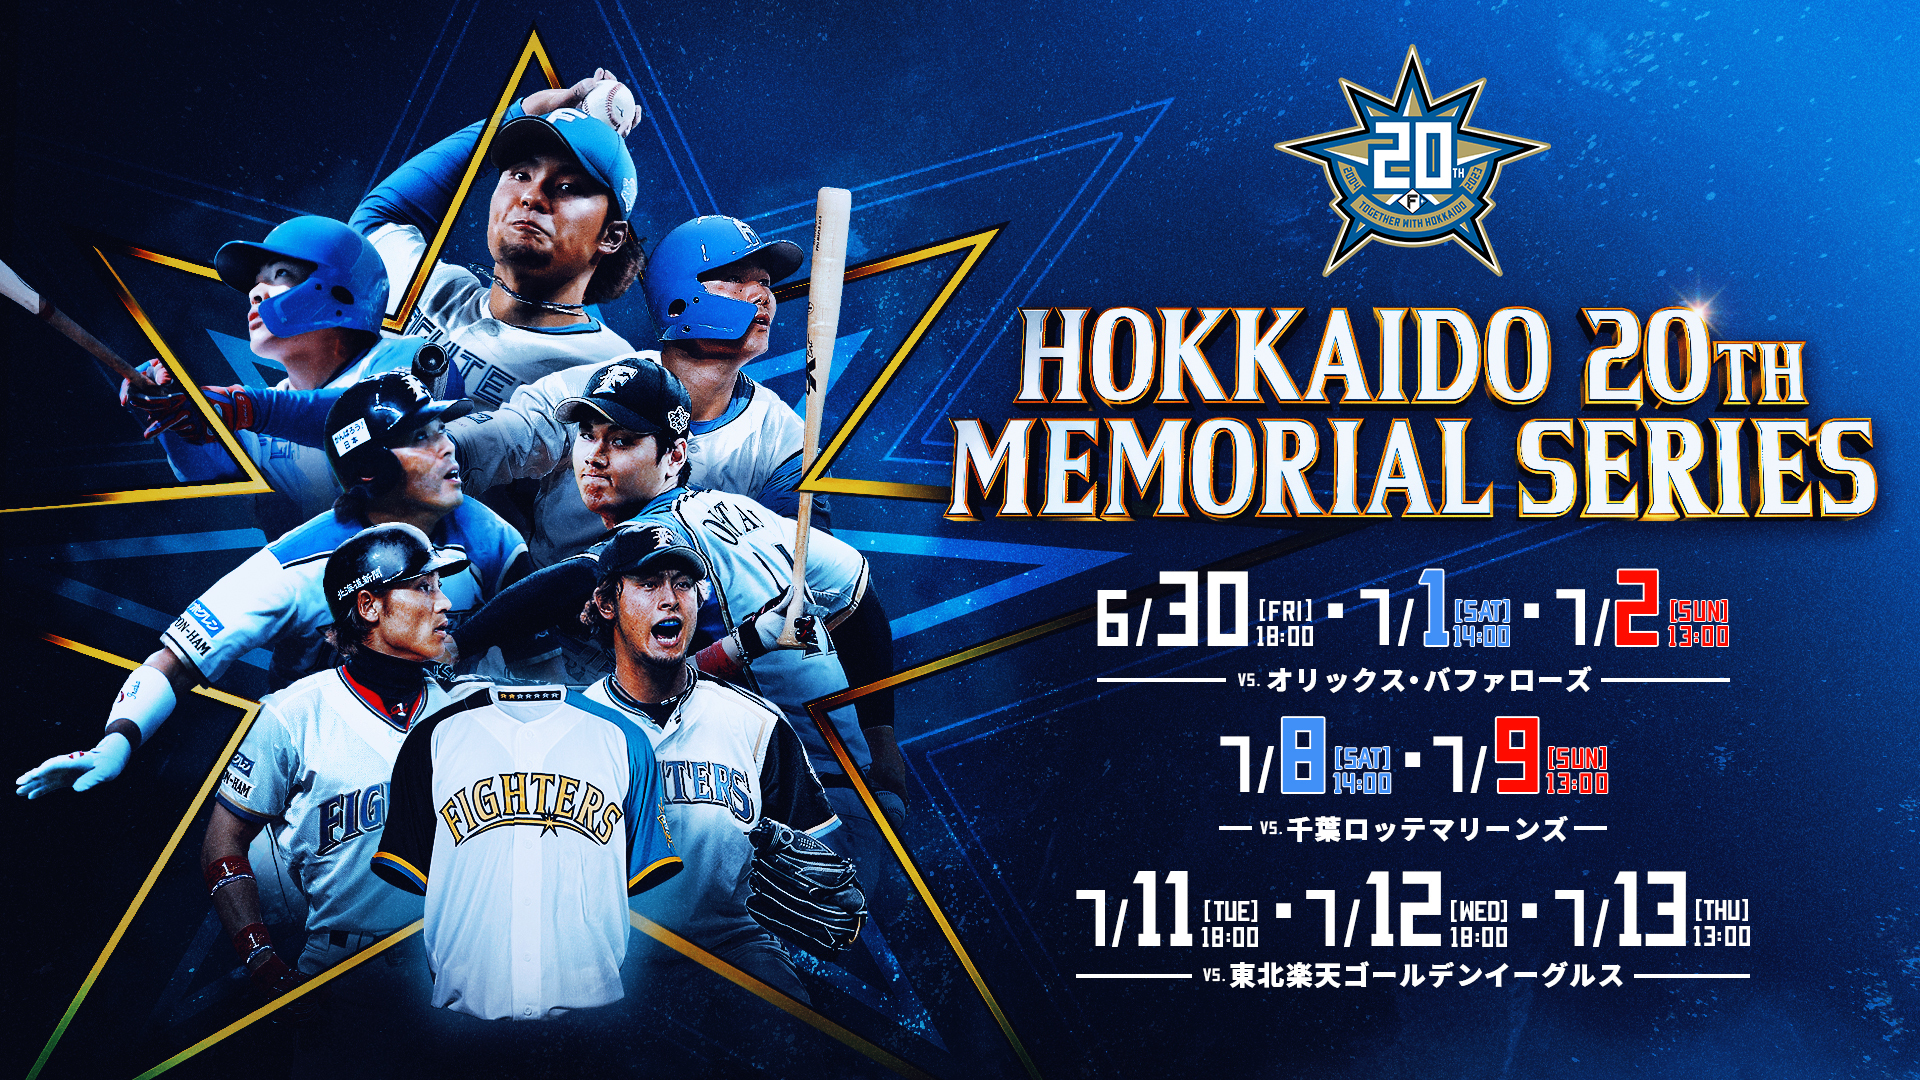 HOKKAIDO ２０th MEMORIAL SERIES」開催 ７月１１～１３日はレジェンドボブルヘッドをプレゼント 道新スポーツ  DOSHIN SPORTS